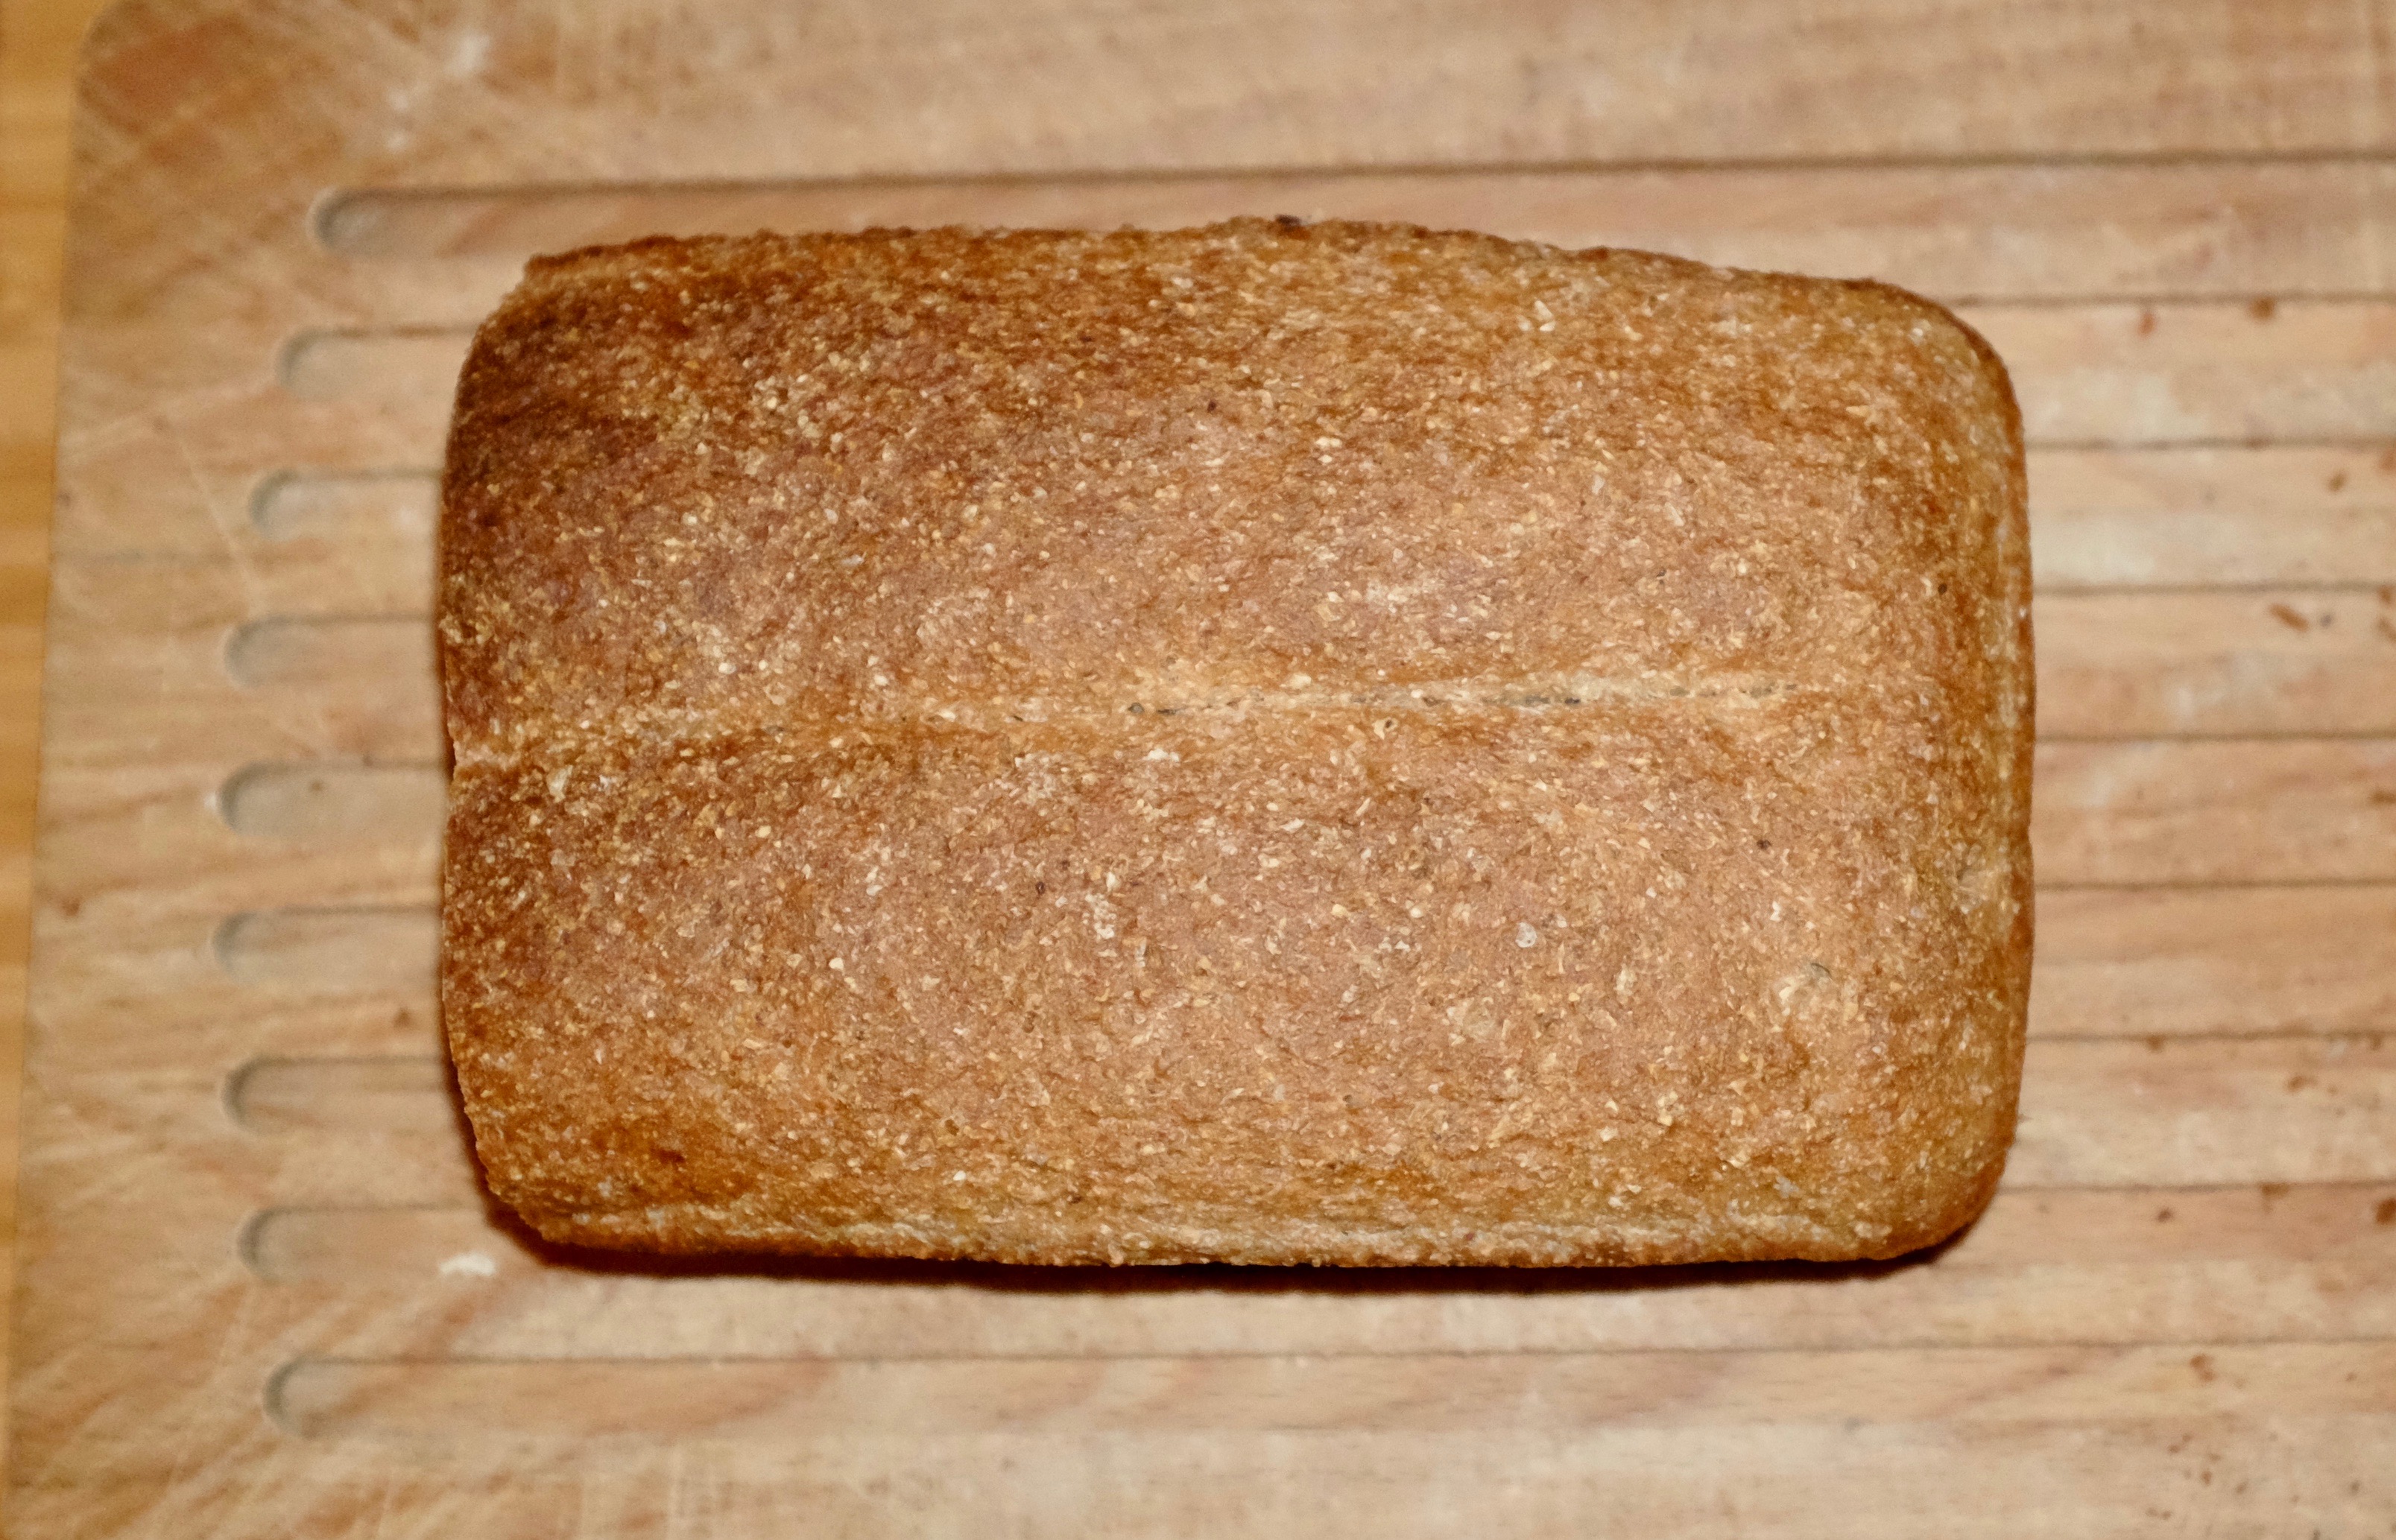 An image of a bread called “Quick Hartog Volkoren”